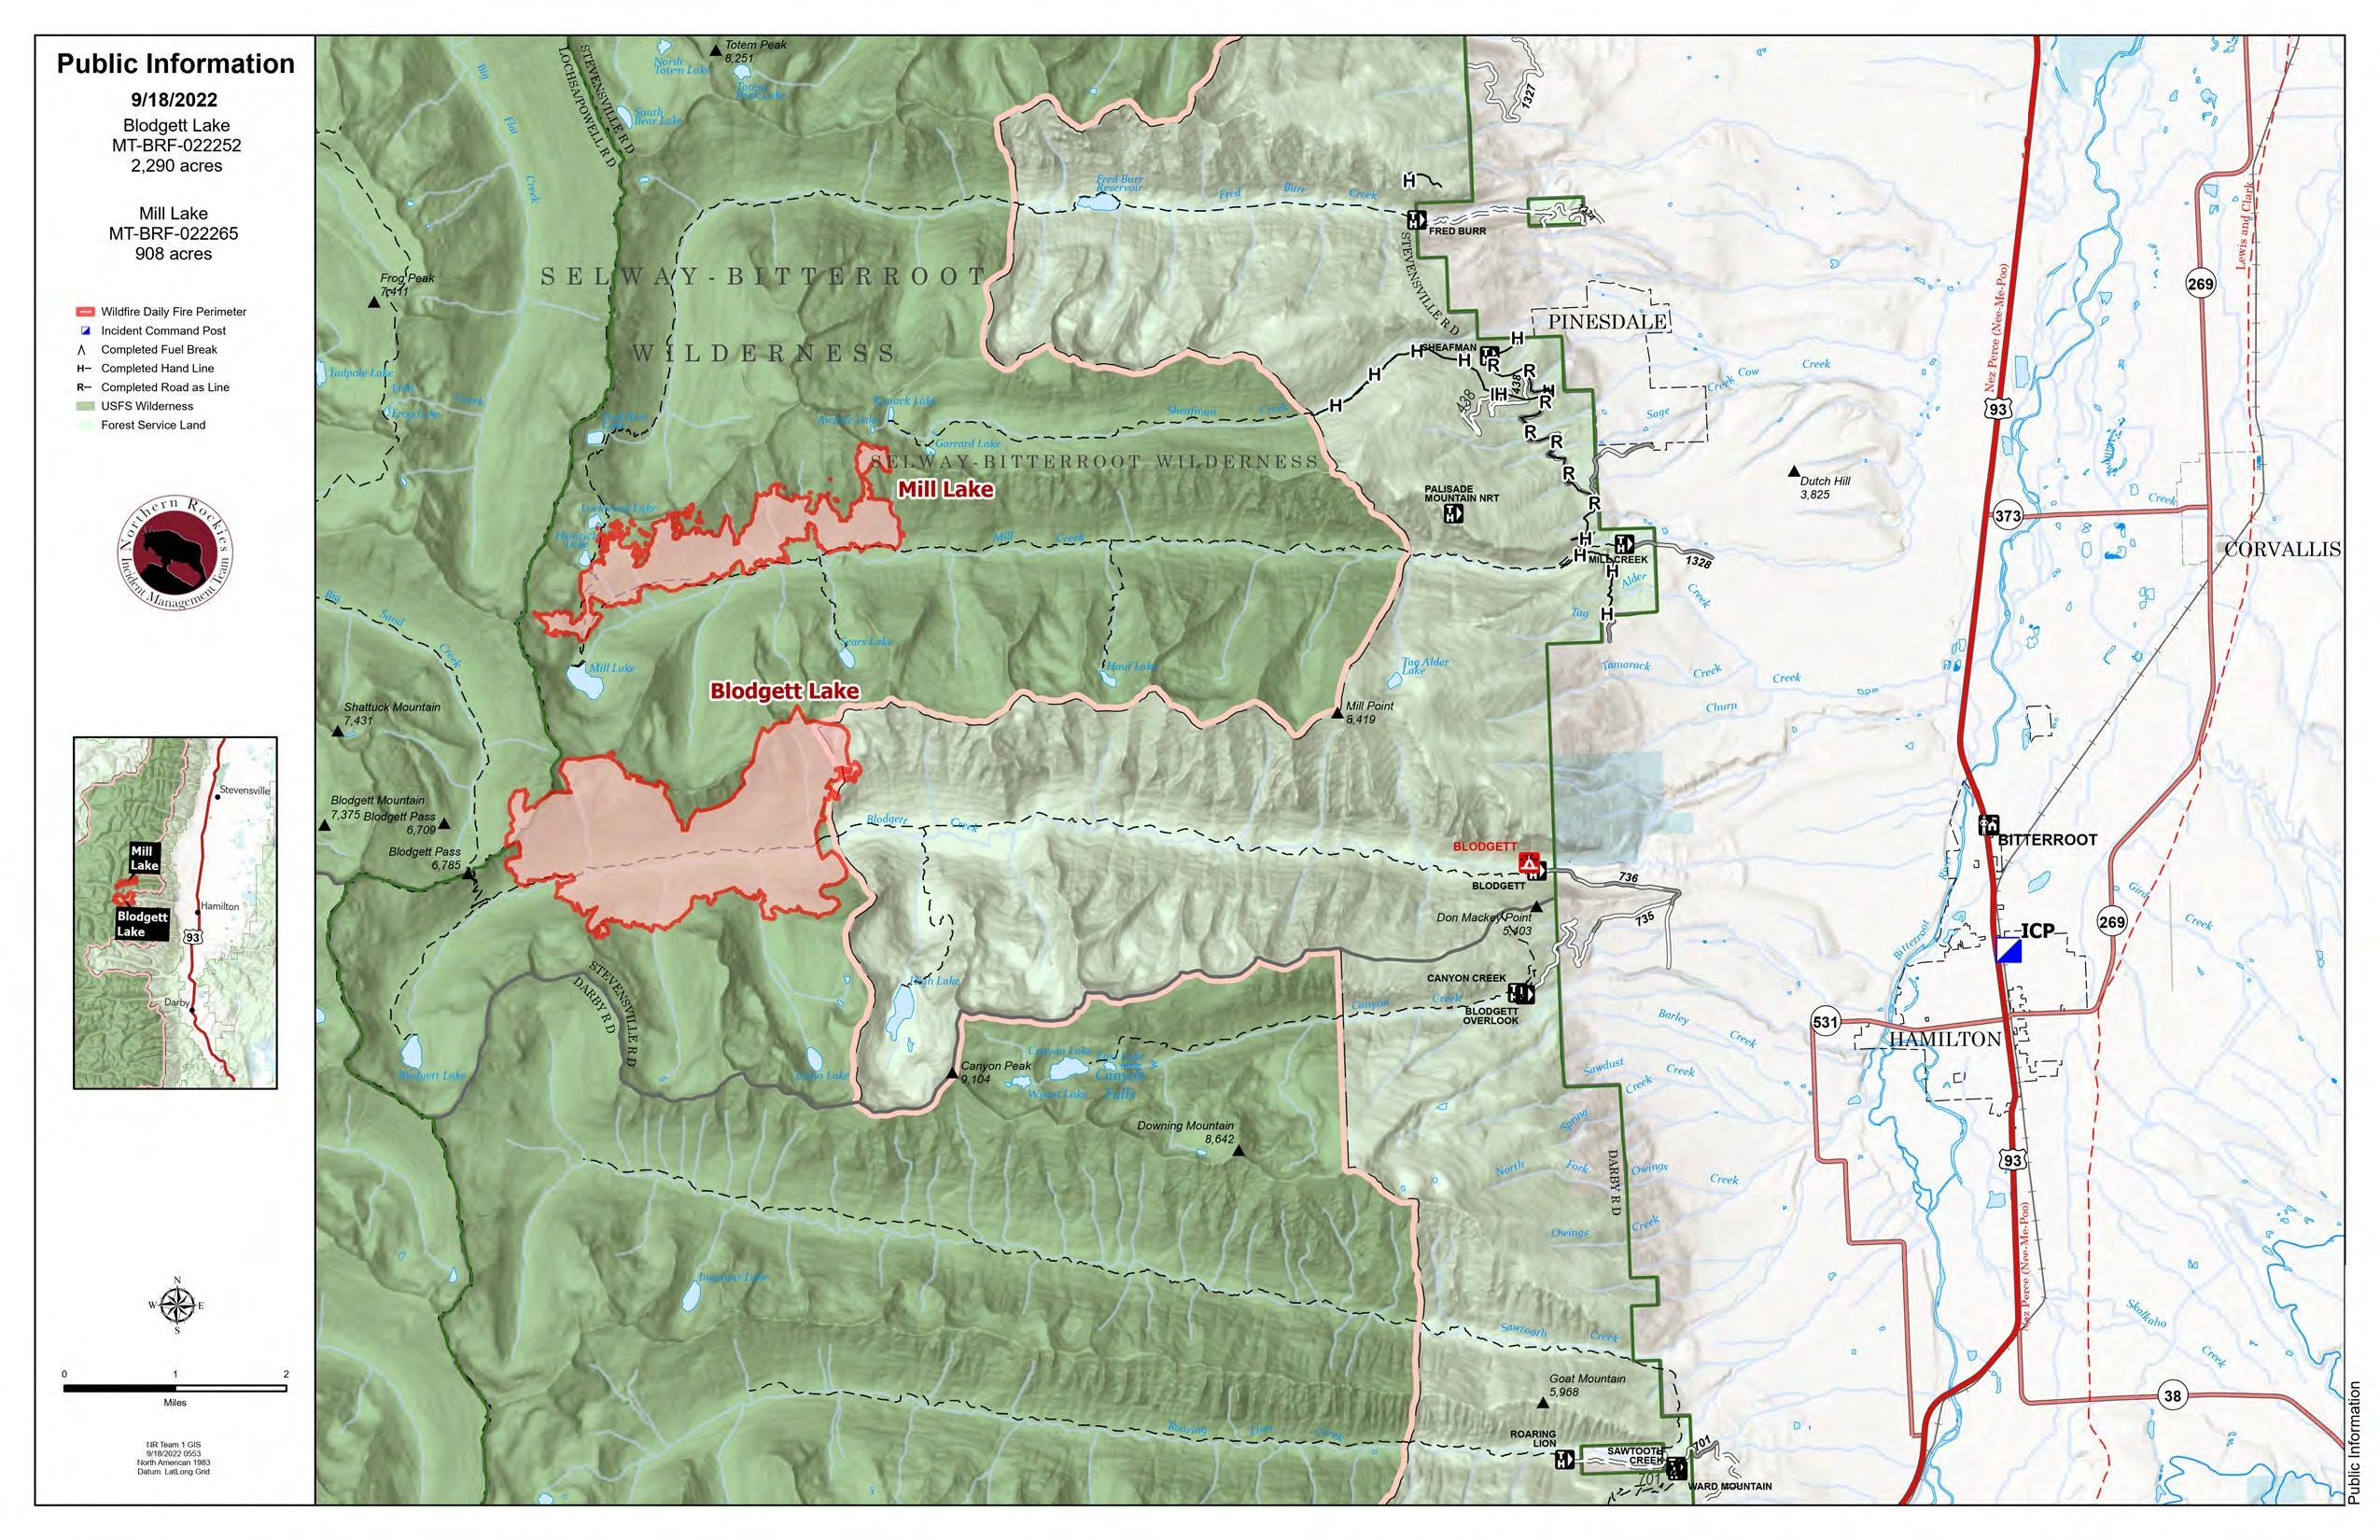 Blodgett Lake & Mill Lake Fire Map Sept 18, 2022